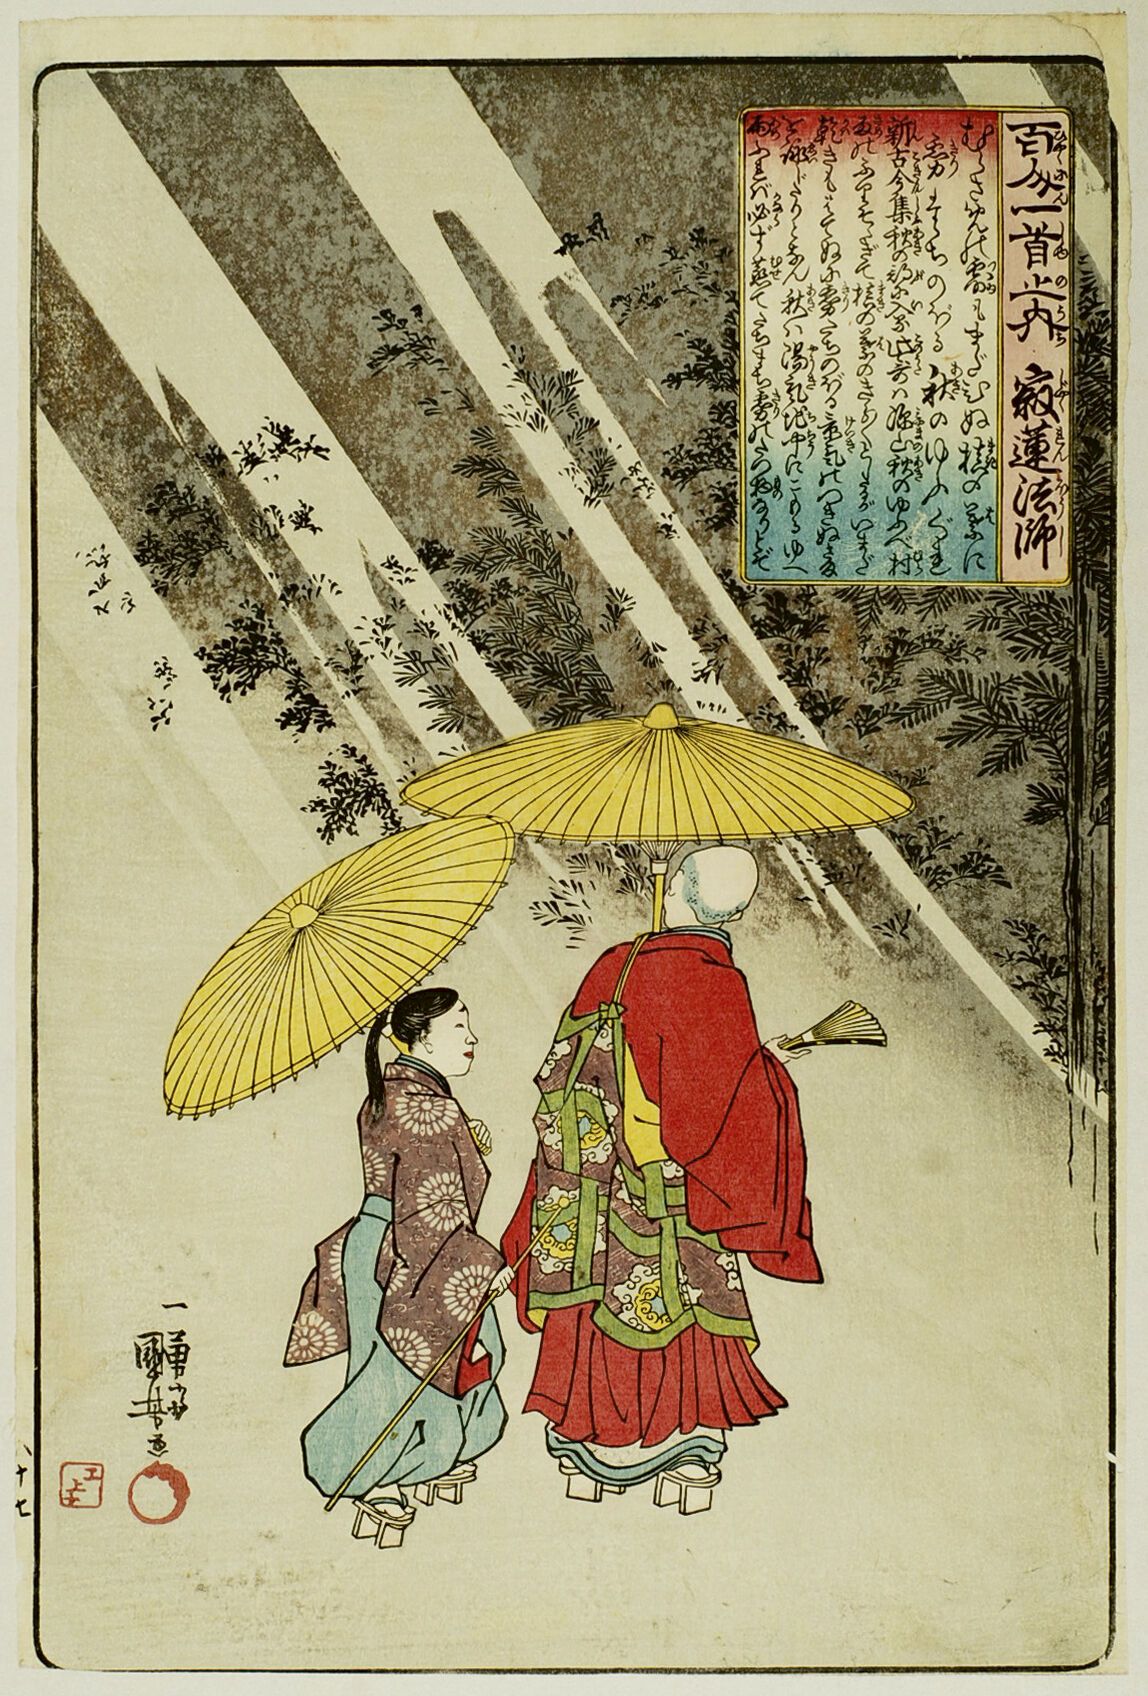 Null 宇多川国义 (1797-1861)
百人一首》系列中的 "大板"（Oban tate-e），板块为 "Jakuren-hôshi"，和尚和他的侍者打着&hellip;